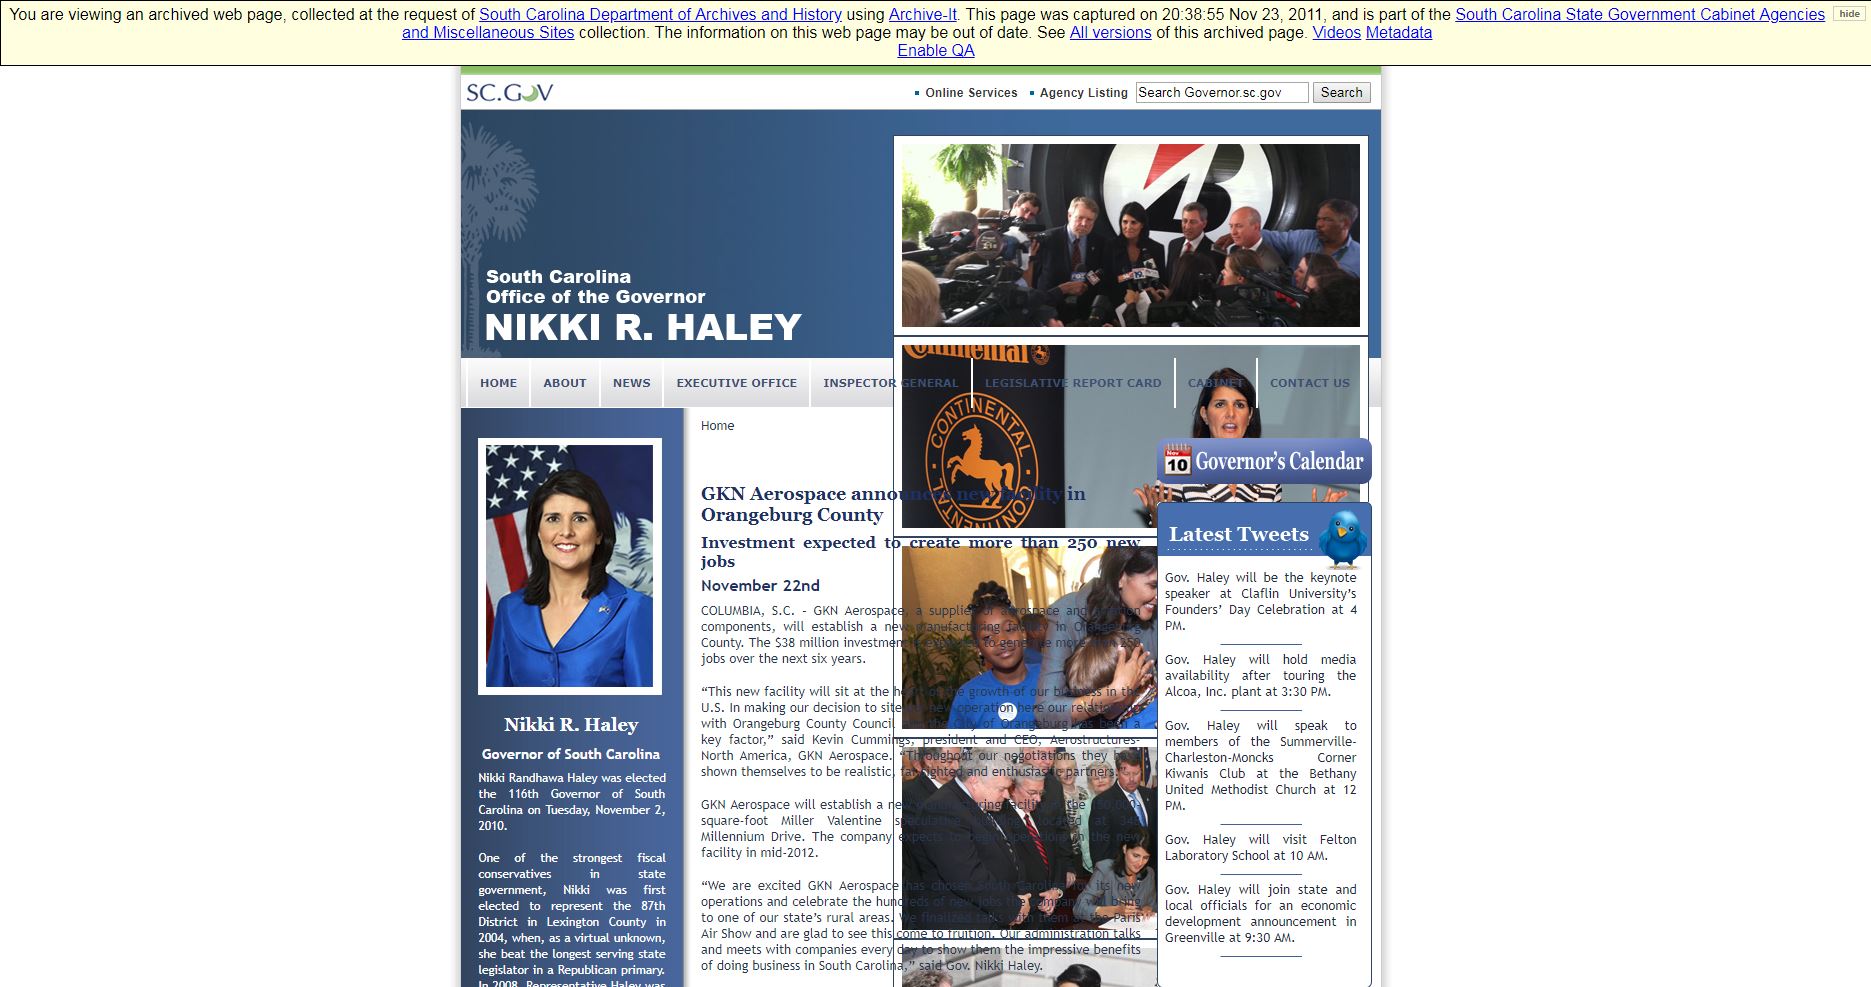 Governor Haley2014 website